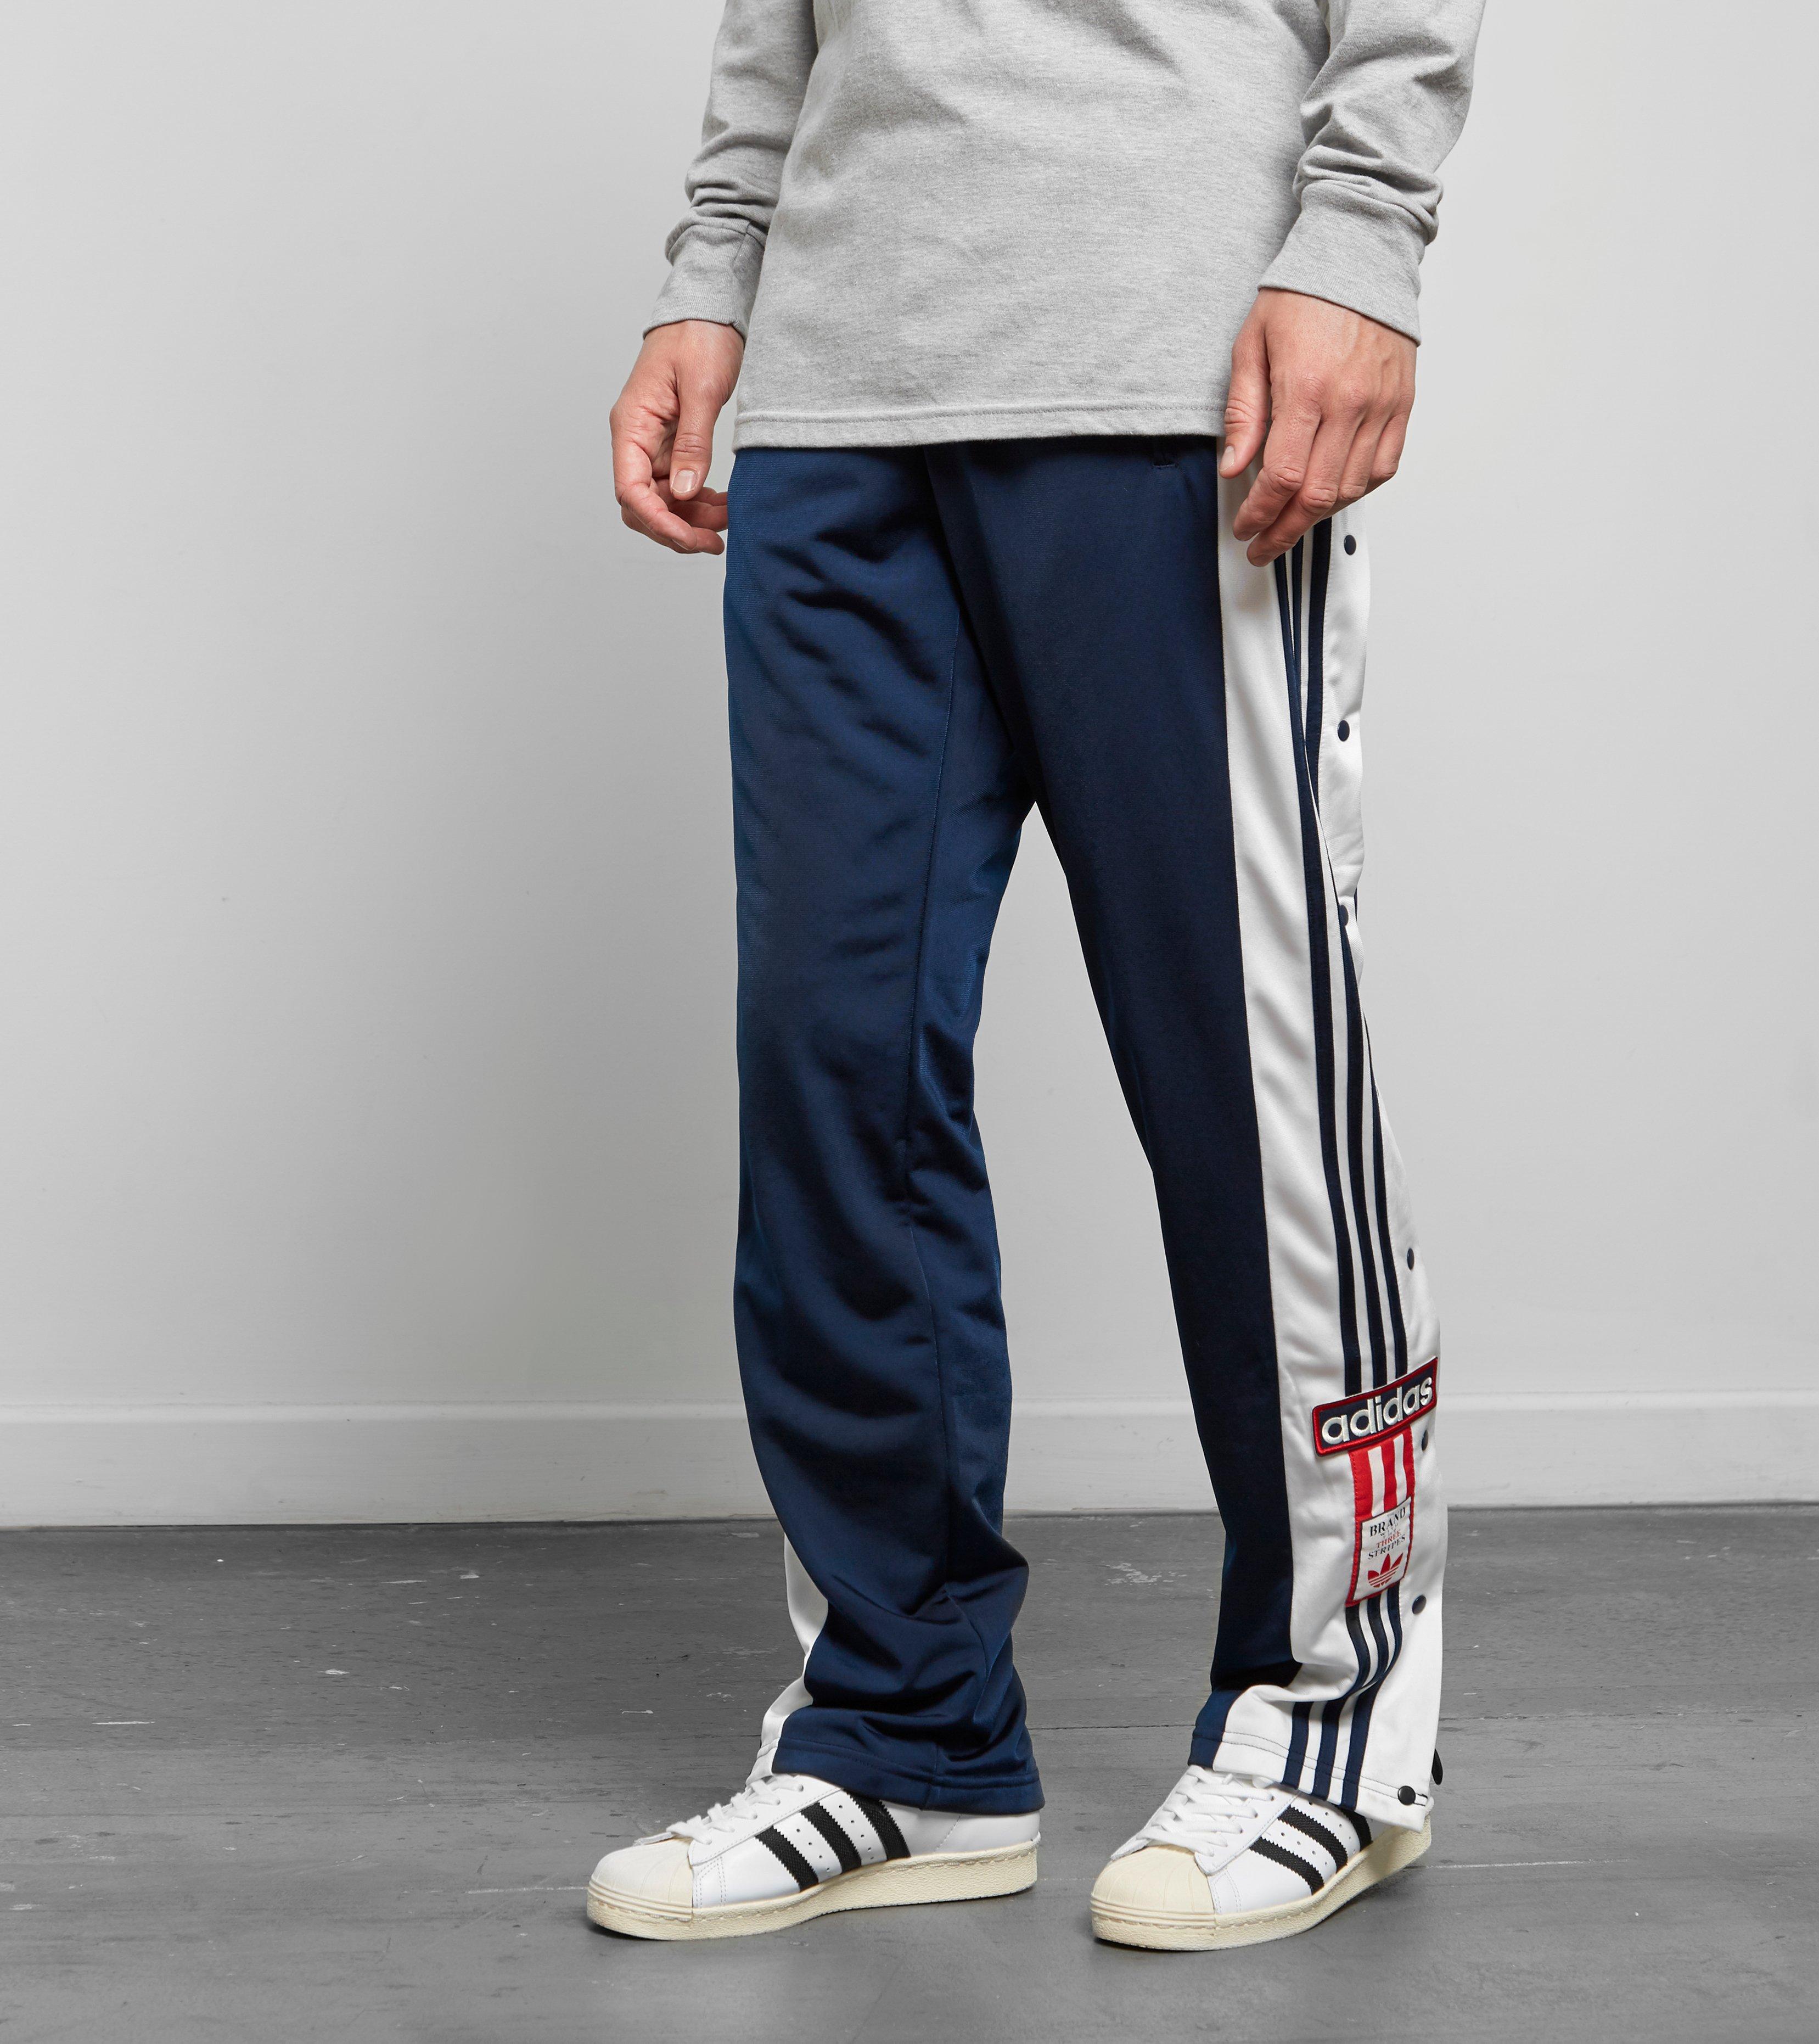 Adidas Originals Adibreak Tearaway Track Pant Urban Outfitters New ...